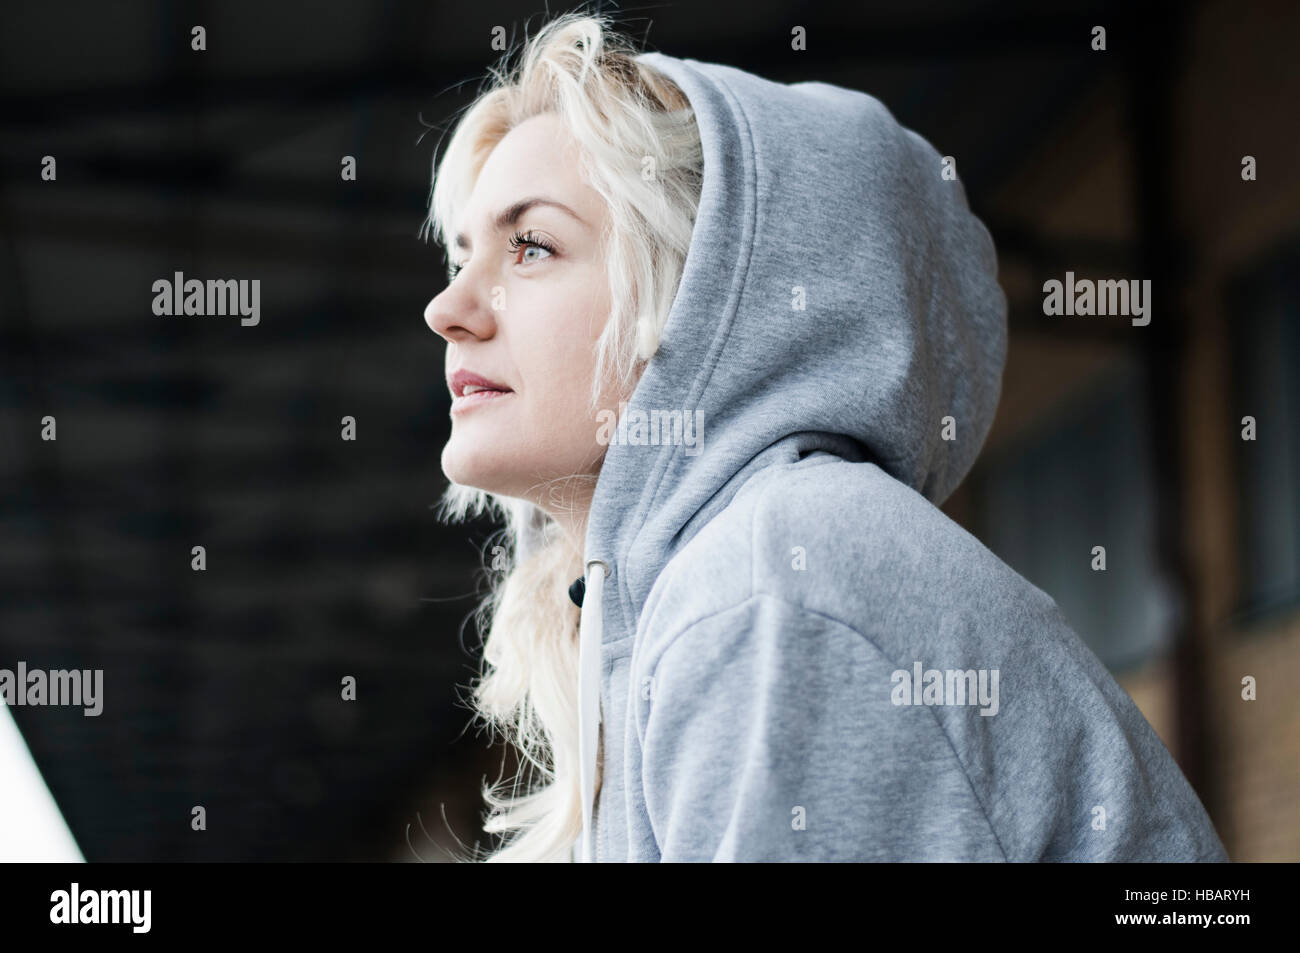 Portrait of mid adult female runner in grey hoody Stock Photo